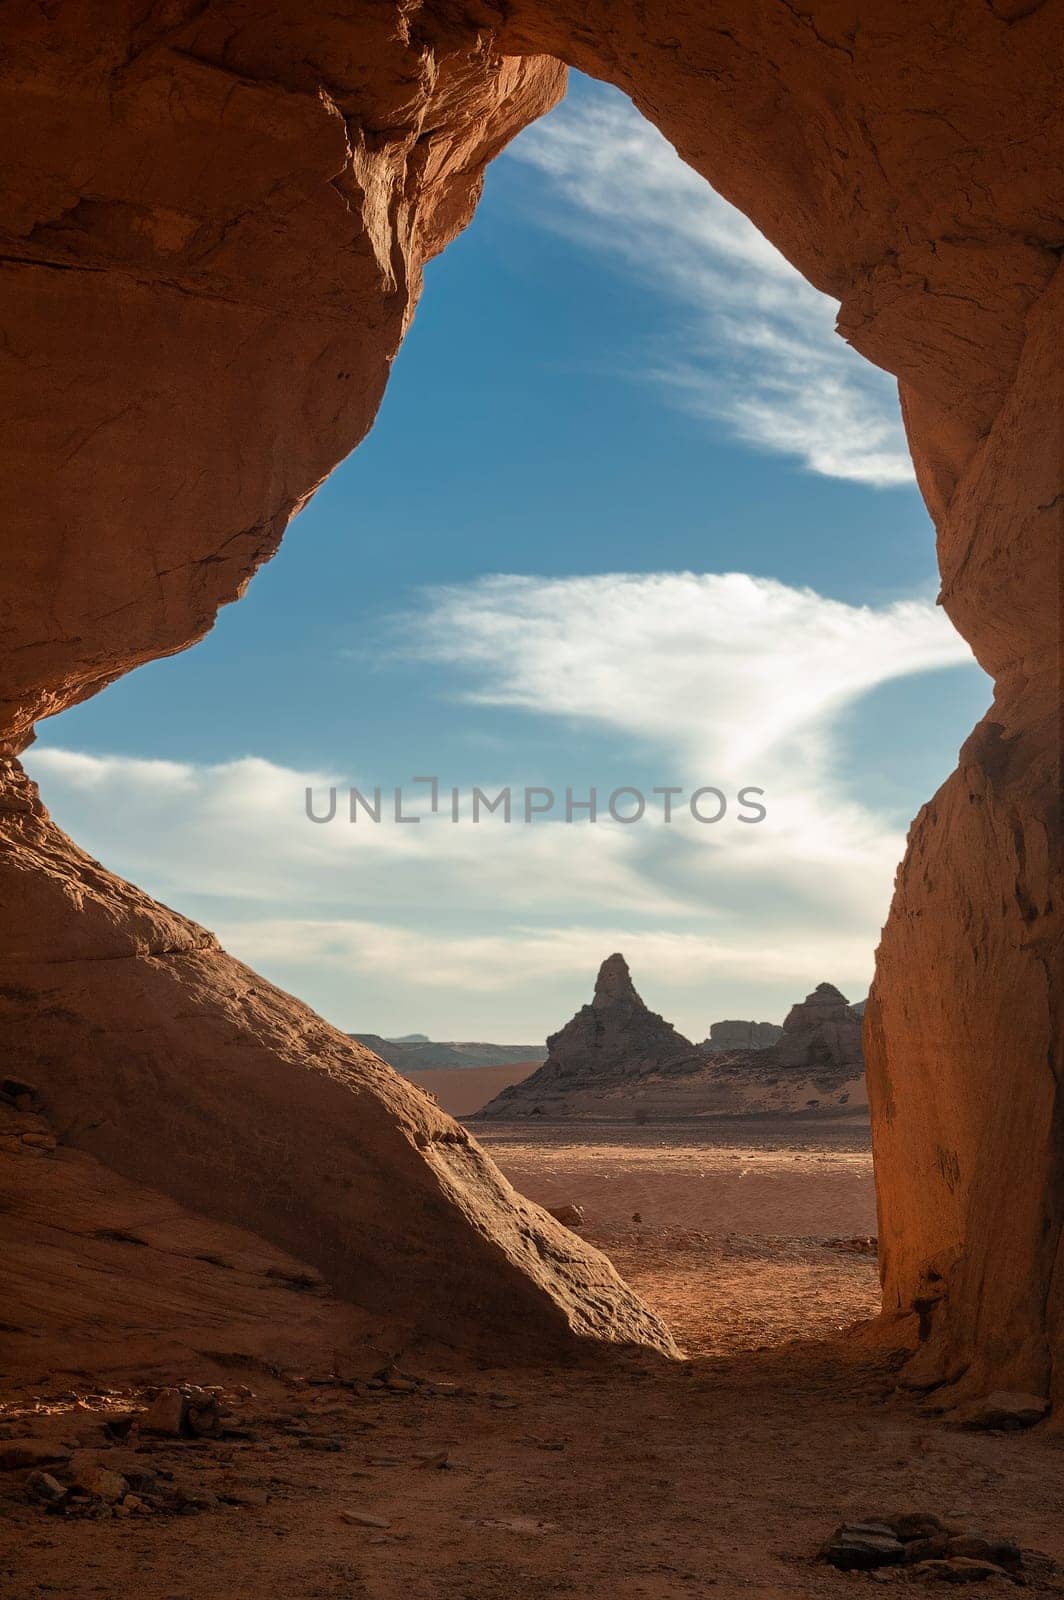 Libyan sahara desert by Giamplume